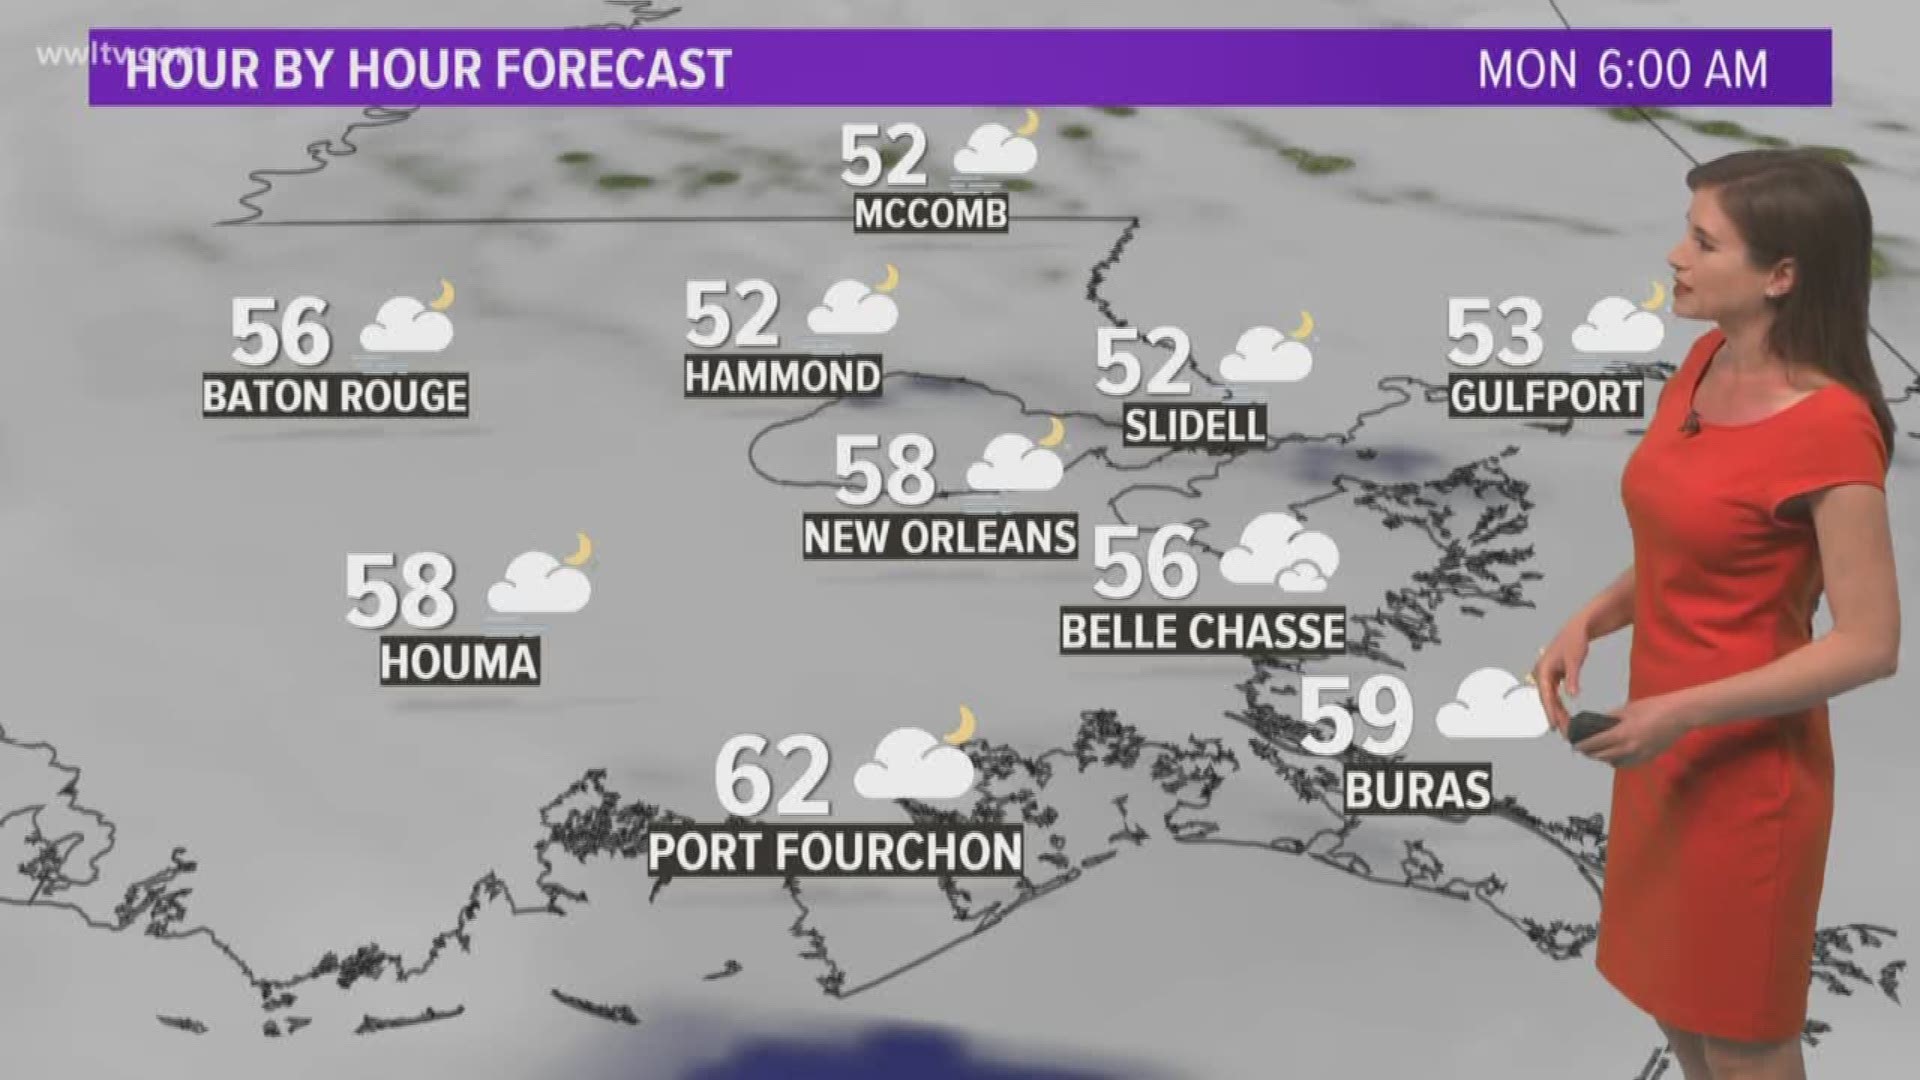 Meteorologist Alexandra Cranford has the forecast at 5:30 p.m. on Sunday, February 16, 2020.